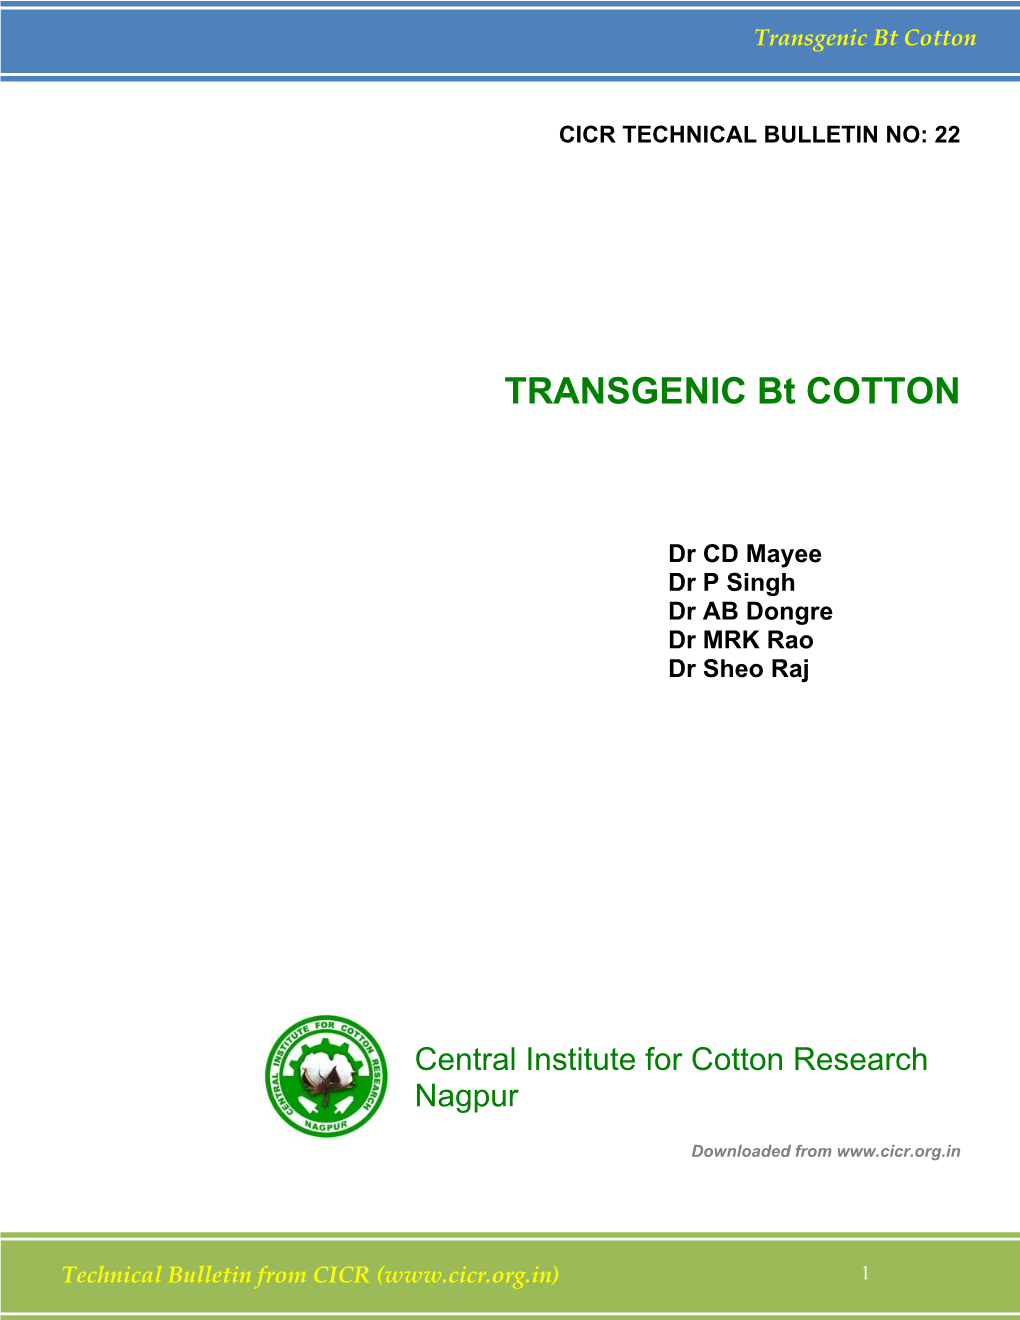 Transgenic Bt Cotton